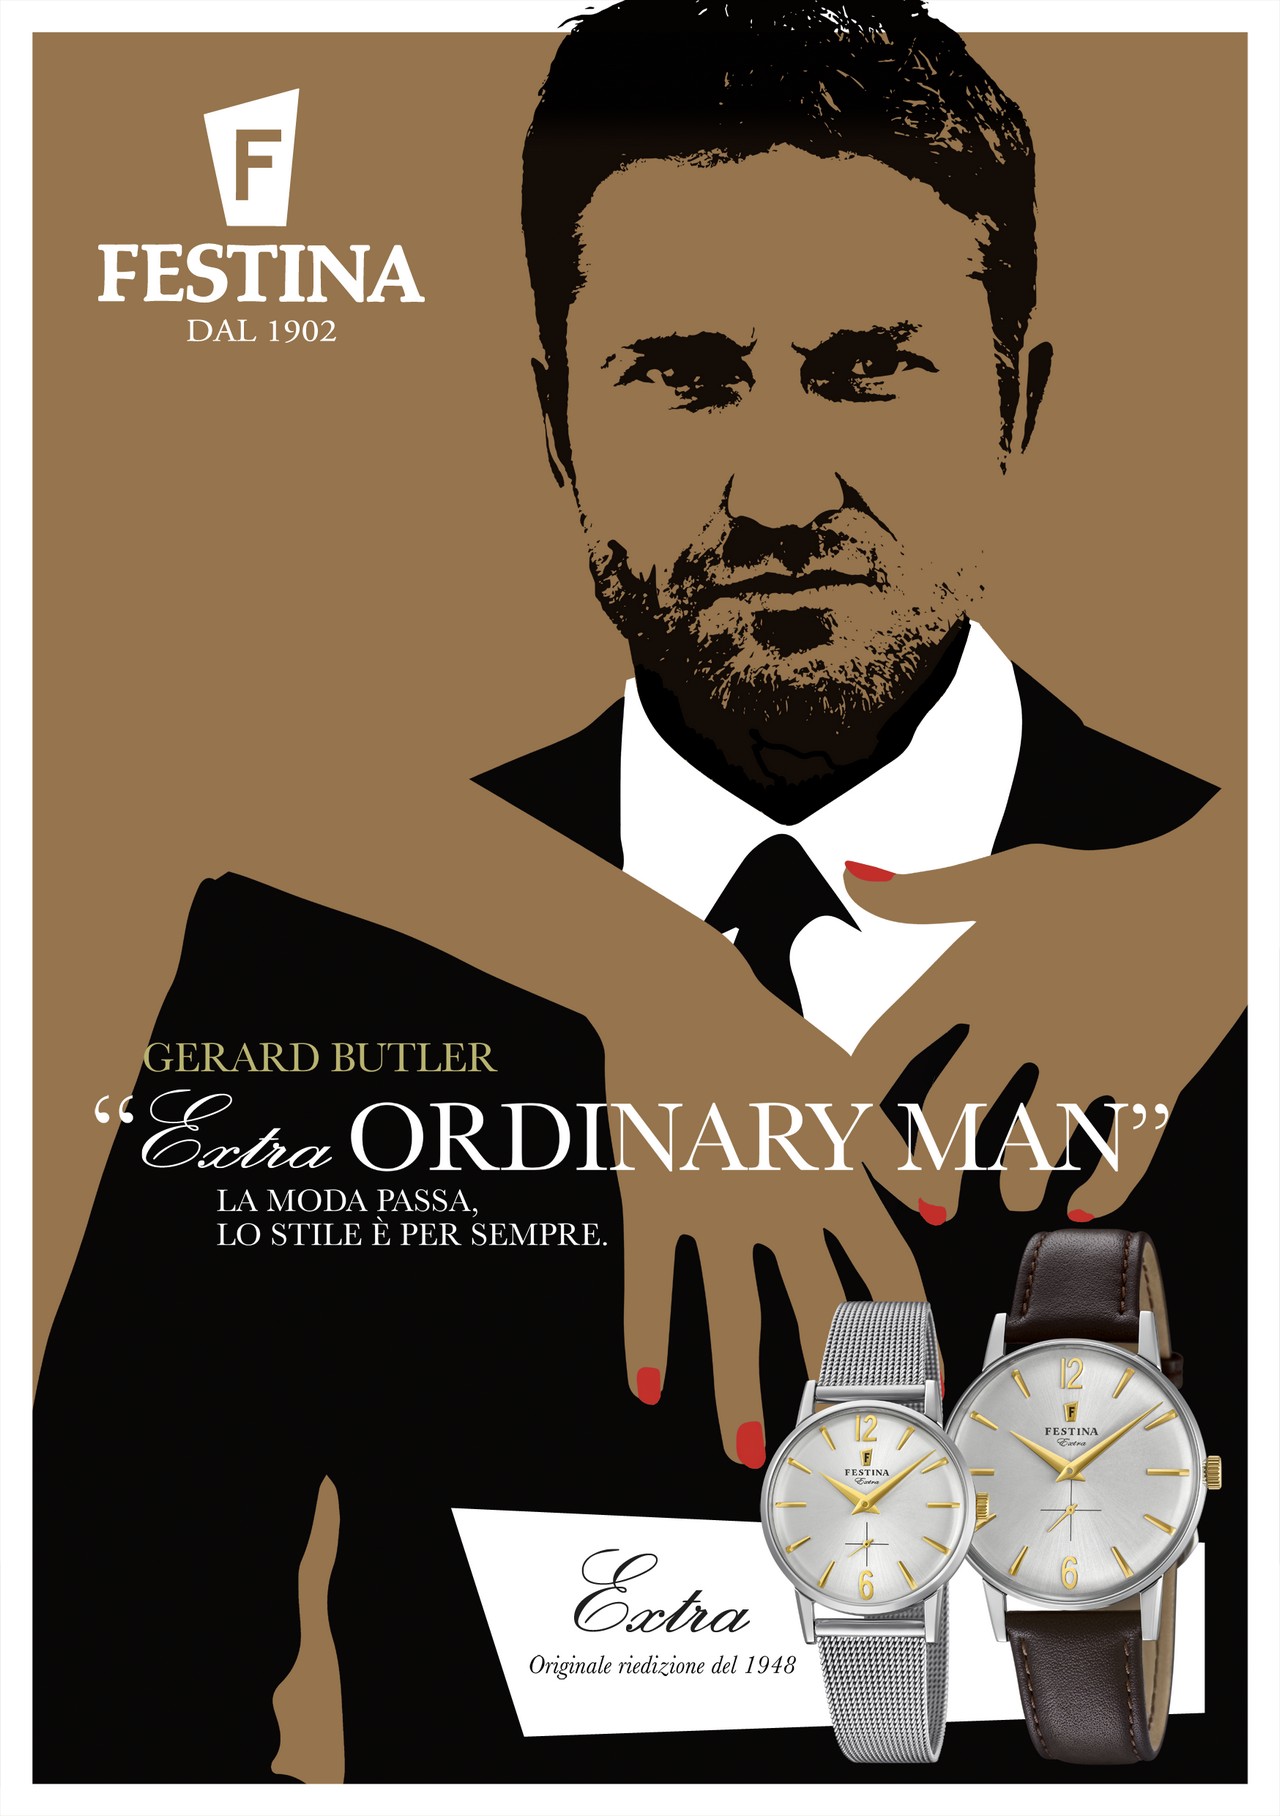 Gerard Butler Festina: brand ambassador e protagonista per la campagna Extra, le foto